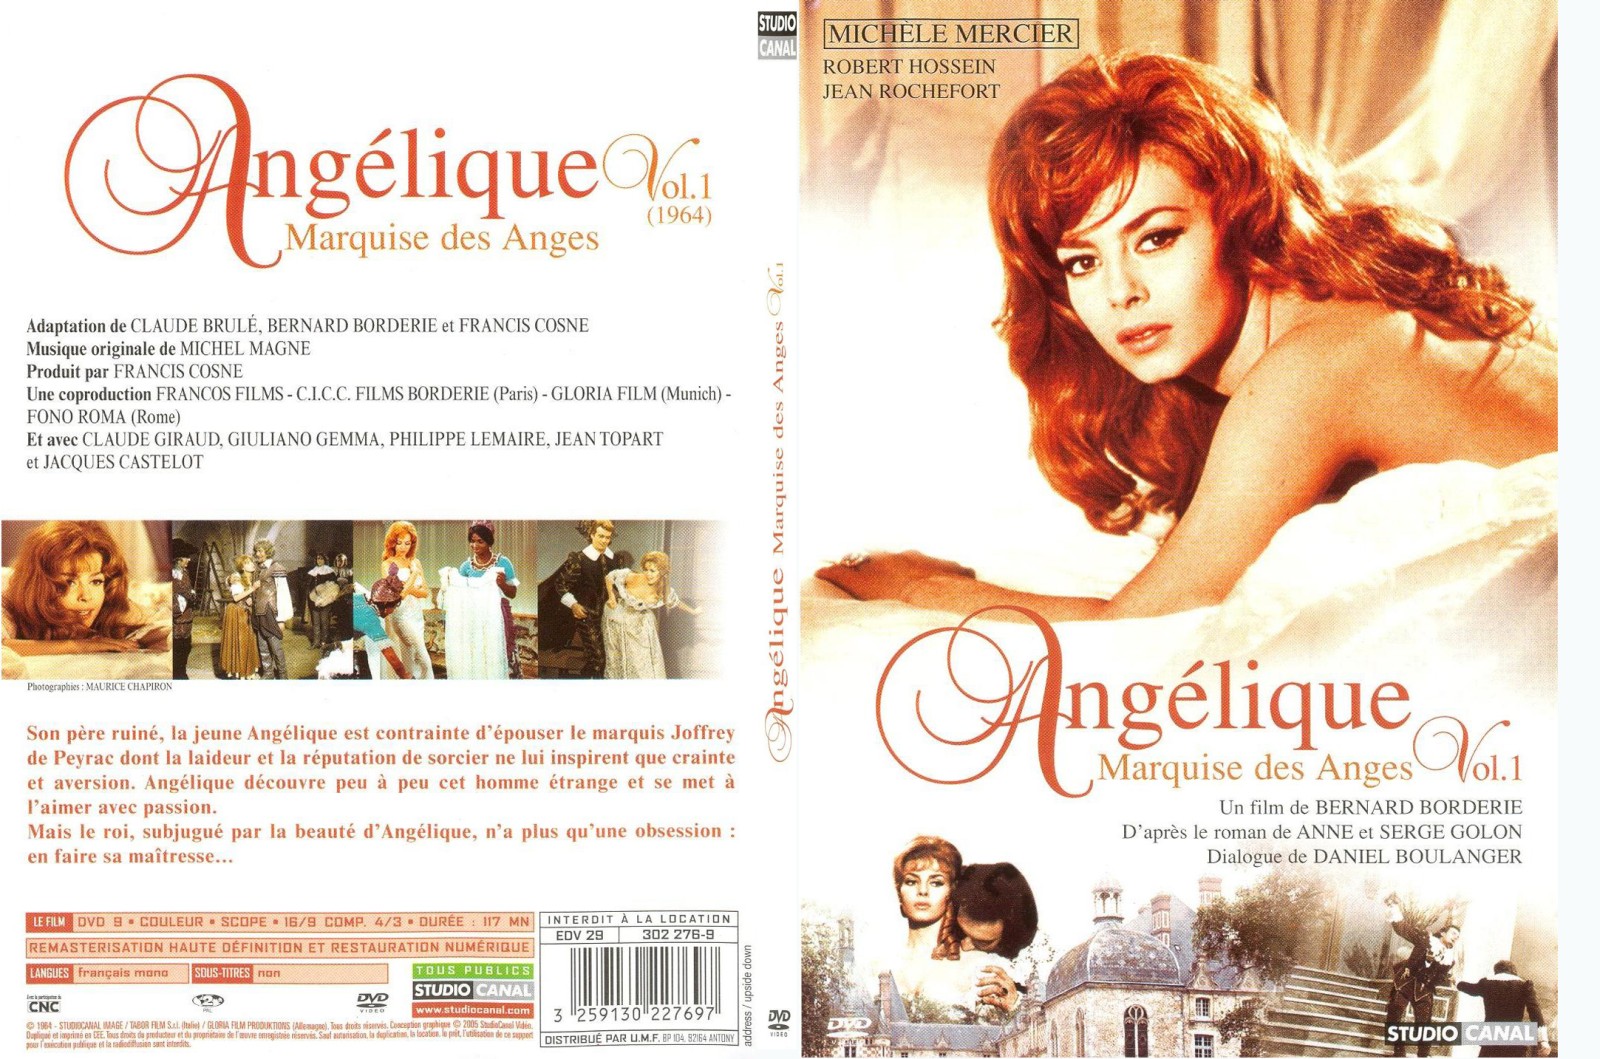 Angelique_Marquise_des_anges___SLIM-20273104122005.jpg